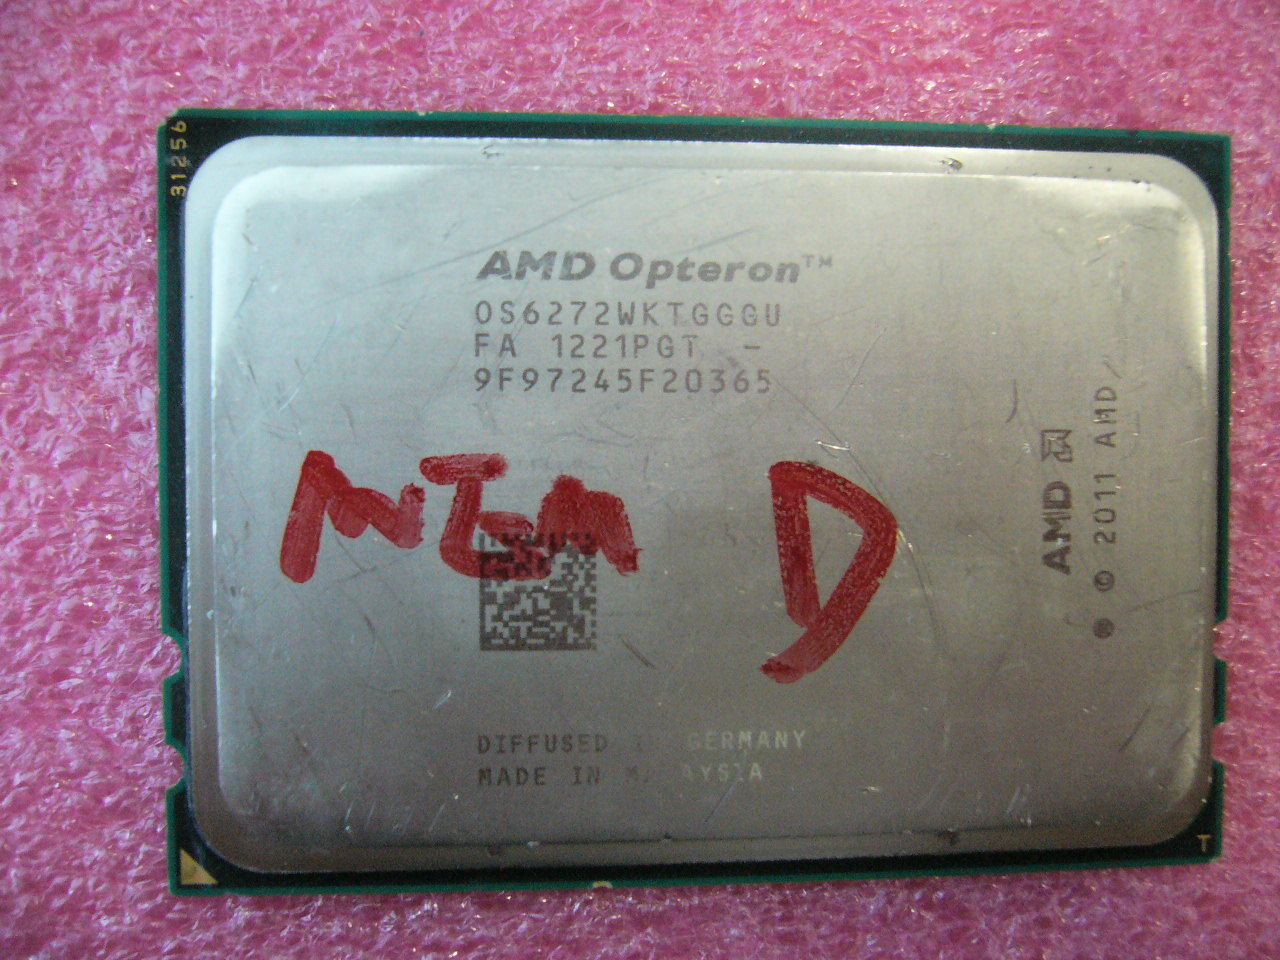 QTY 1x AMD Opteron 6272 2.1GHz Sixteen Core OS6272WKTGGGU CPU Tested G34 mem D - Click Image to Close